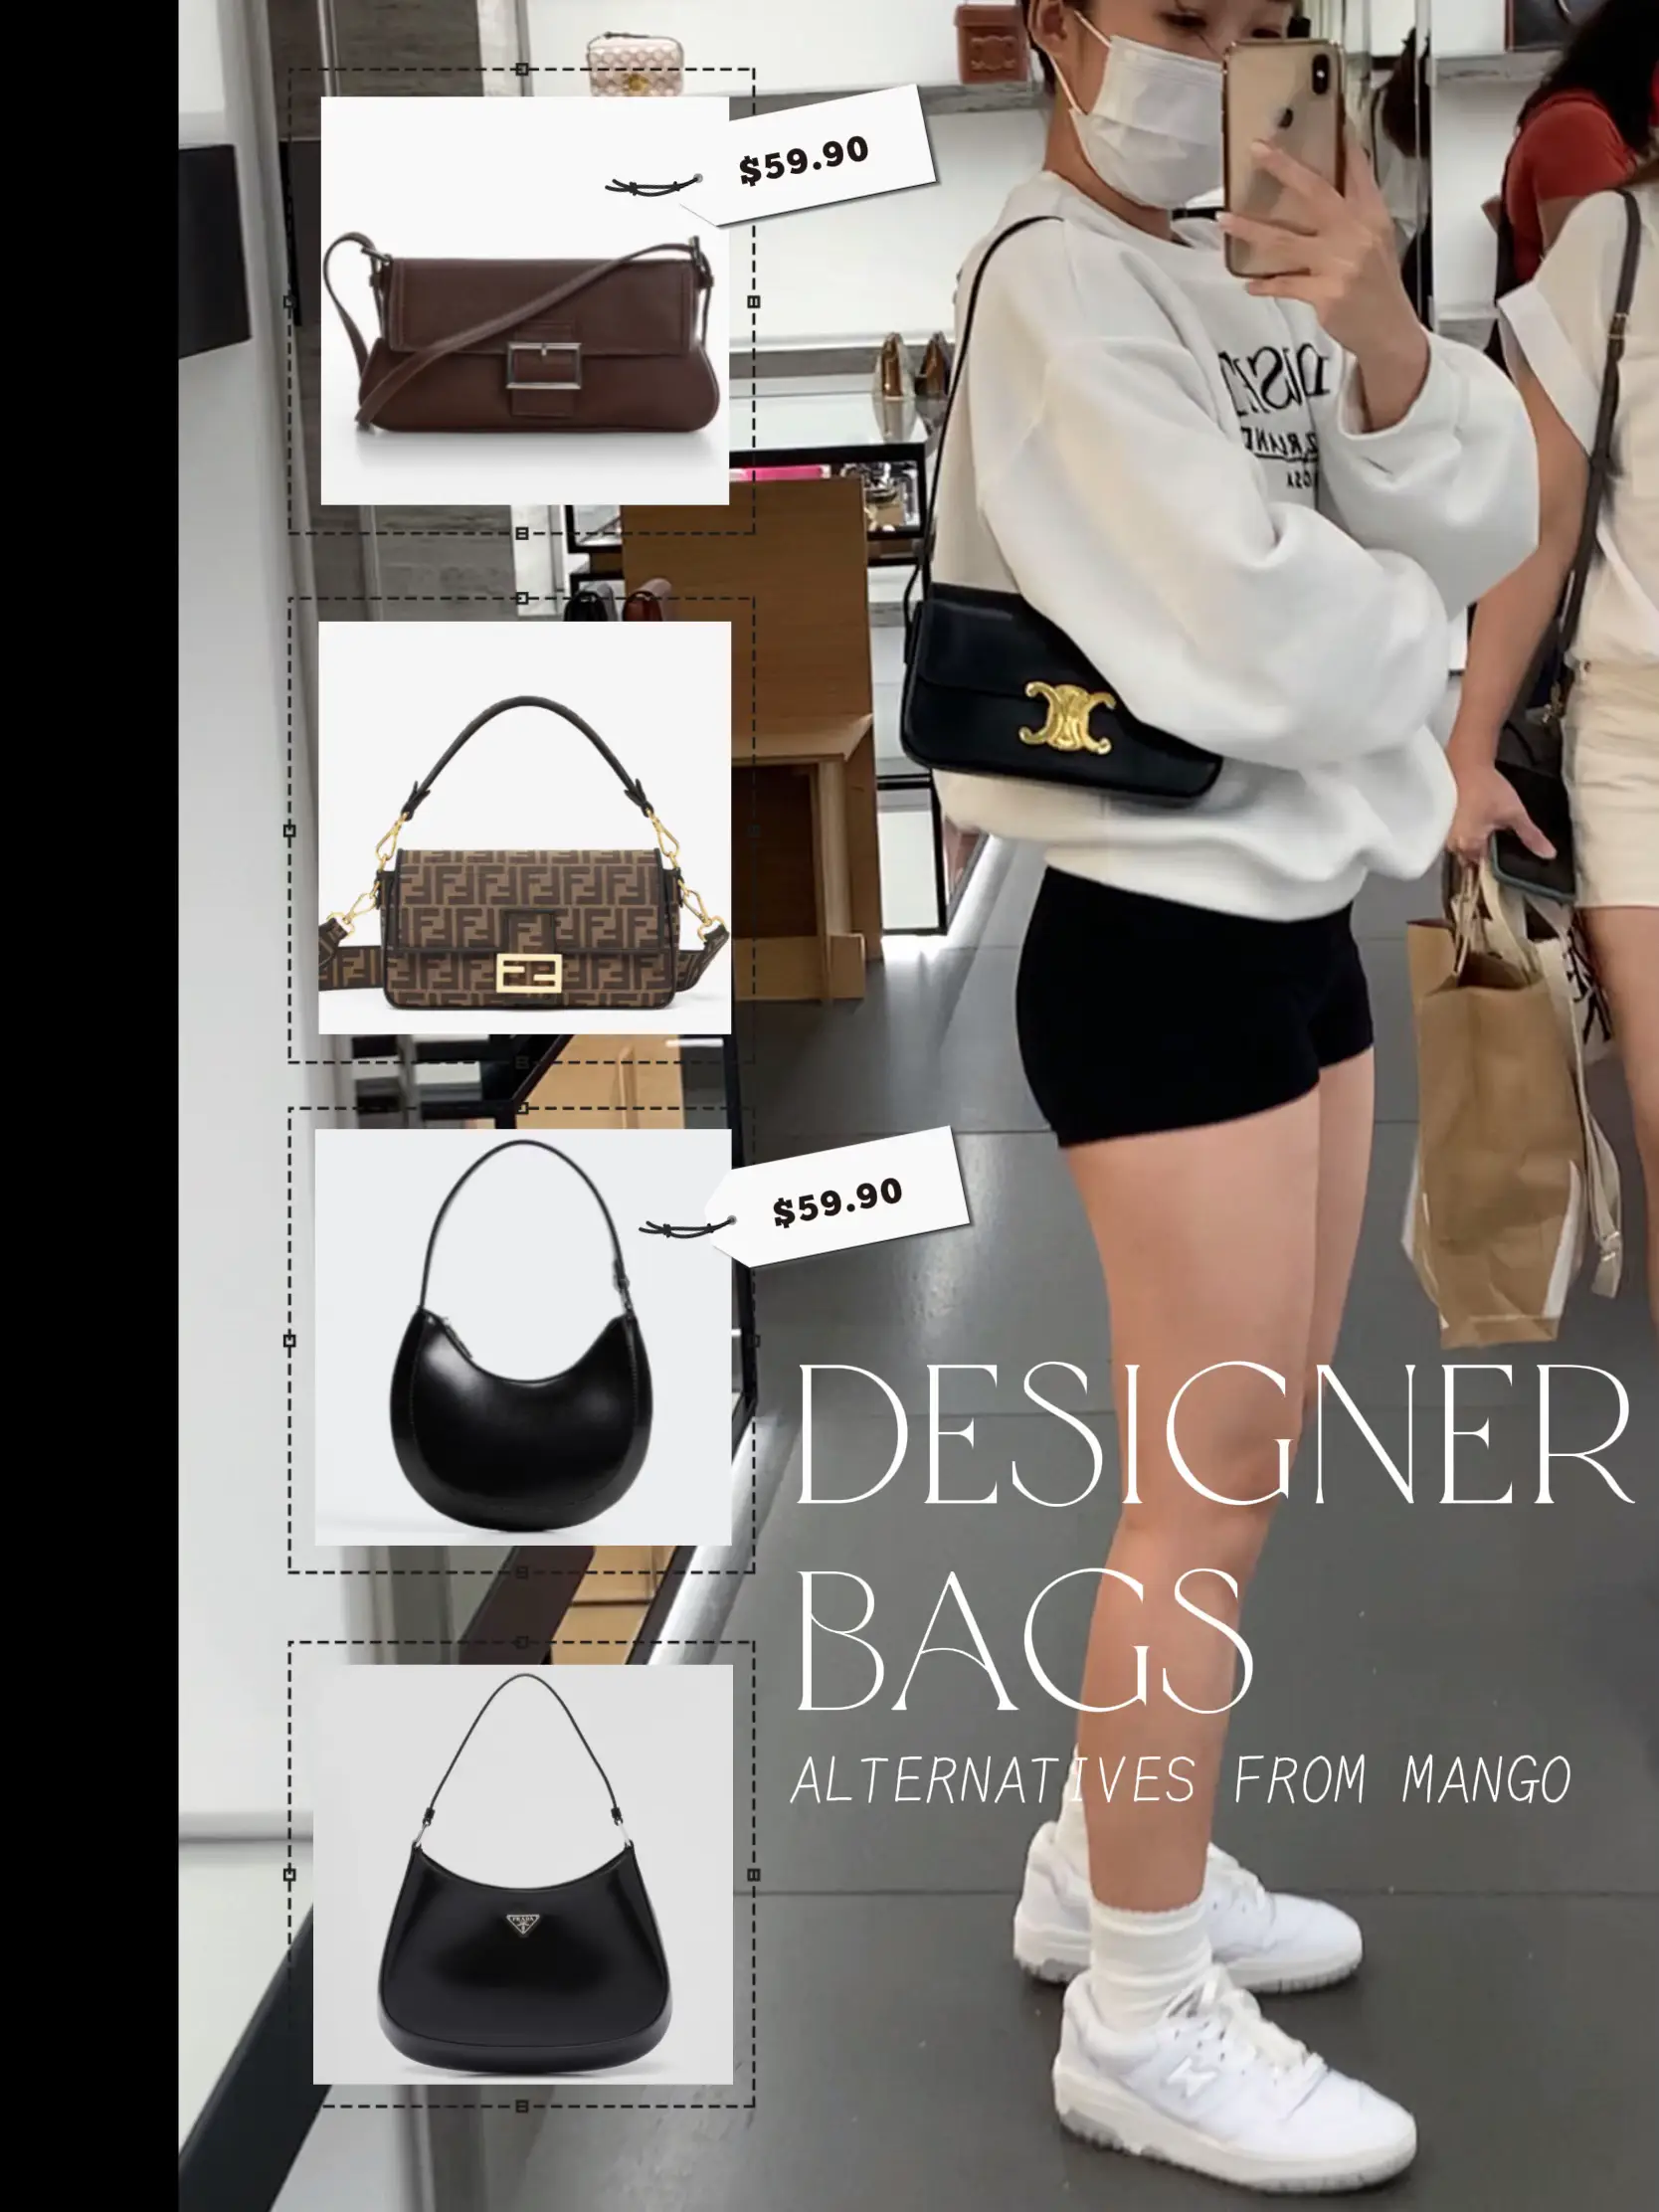 The Best Prada Cleo Bag Dupes To Shop RN